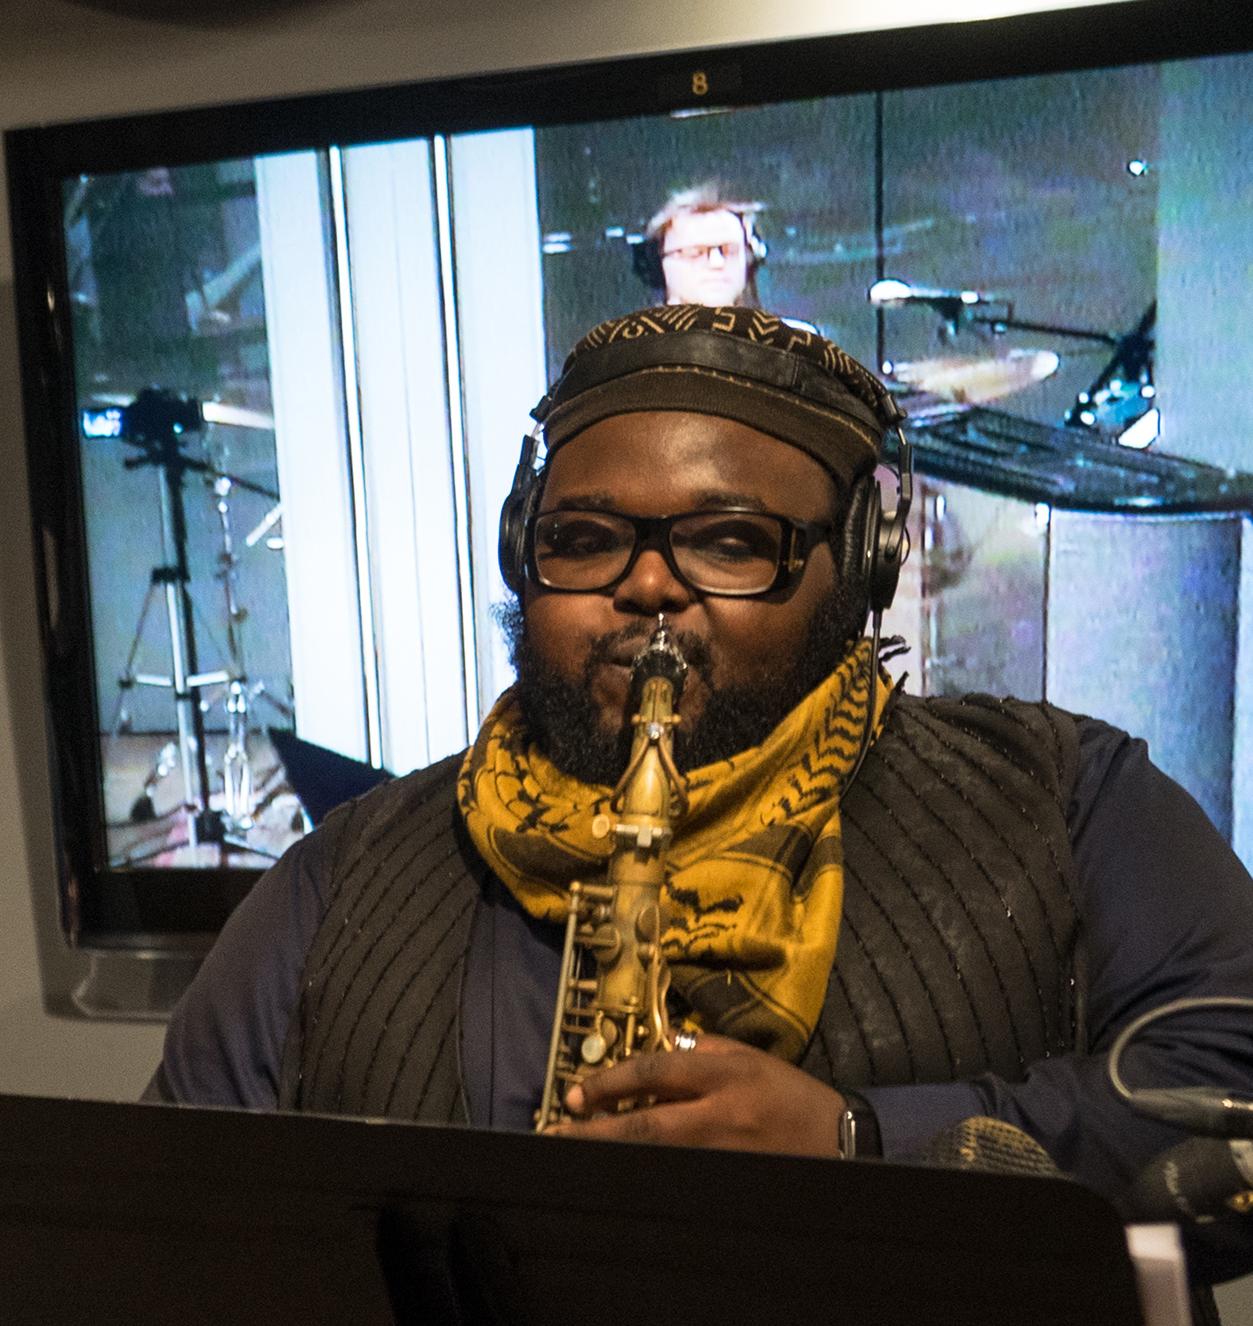 A student plays the saxophone at an NYU studio